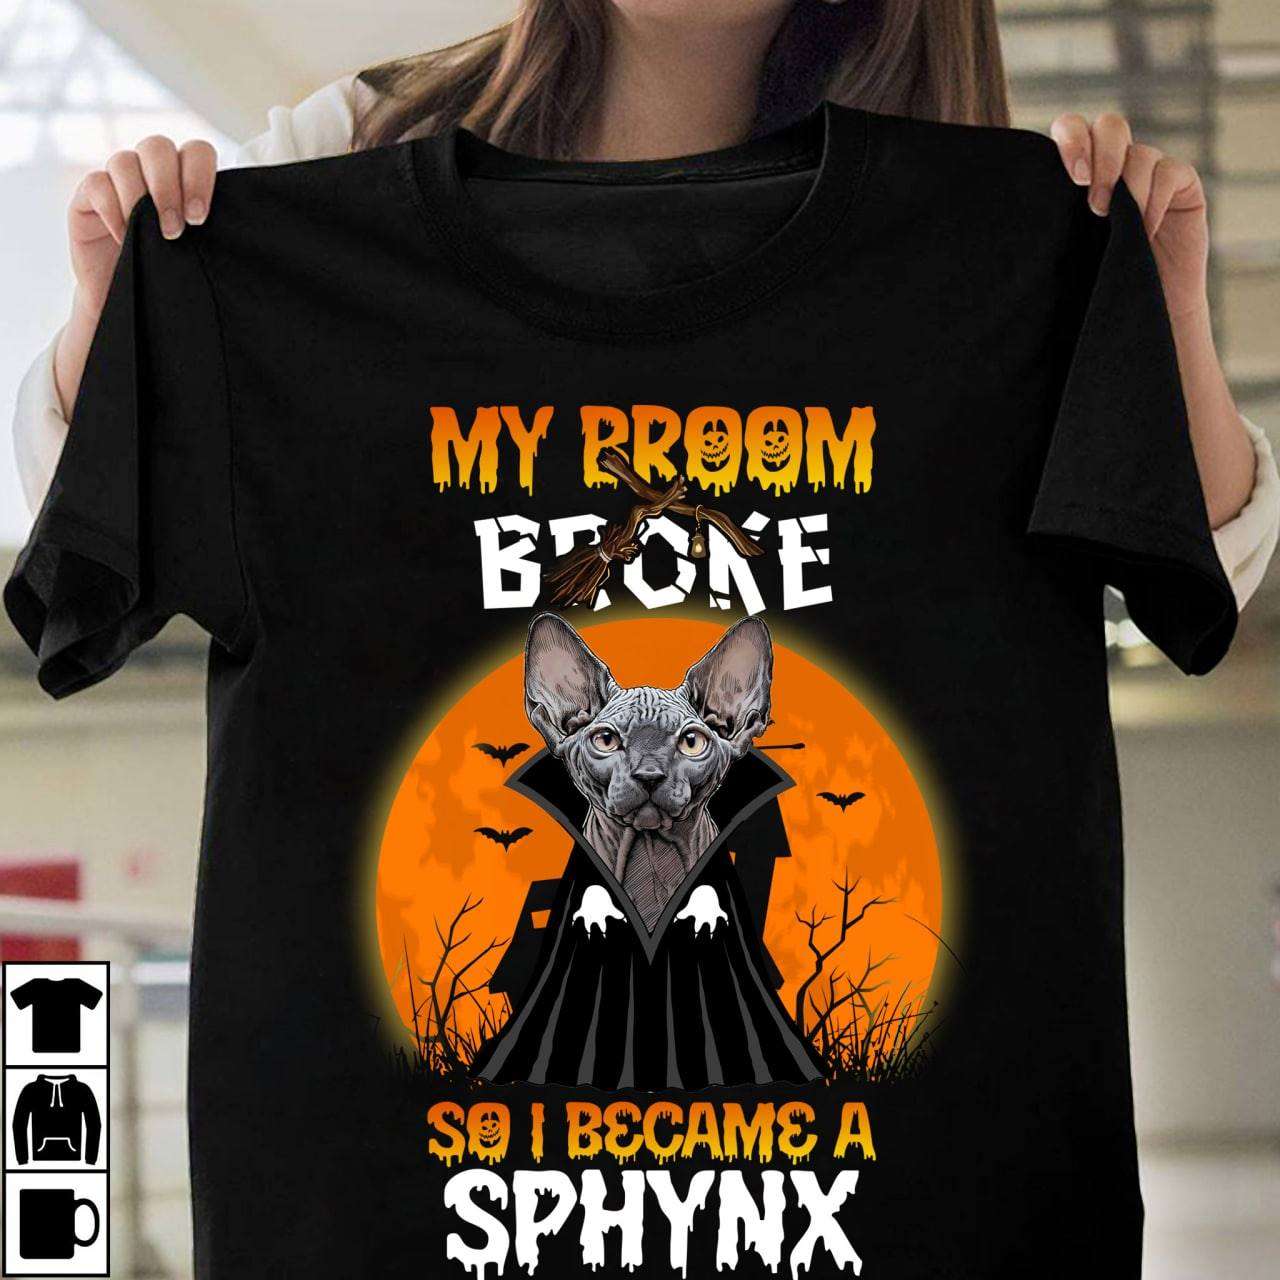 Sphynx Cat - My broom broke so i became a sphynx